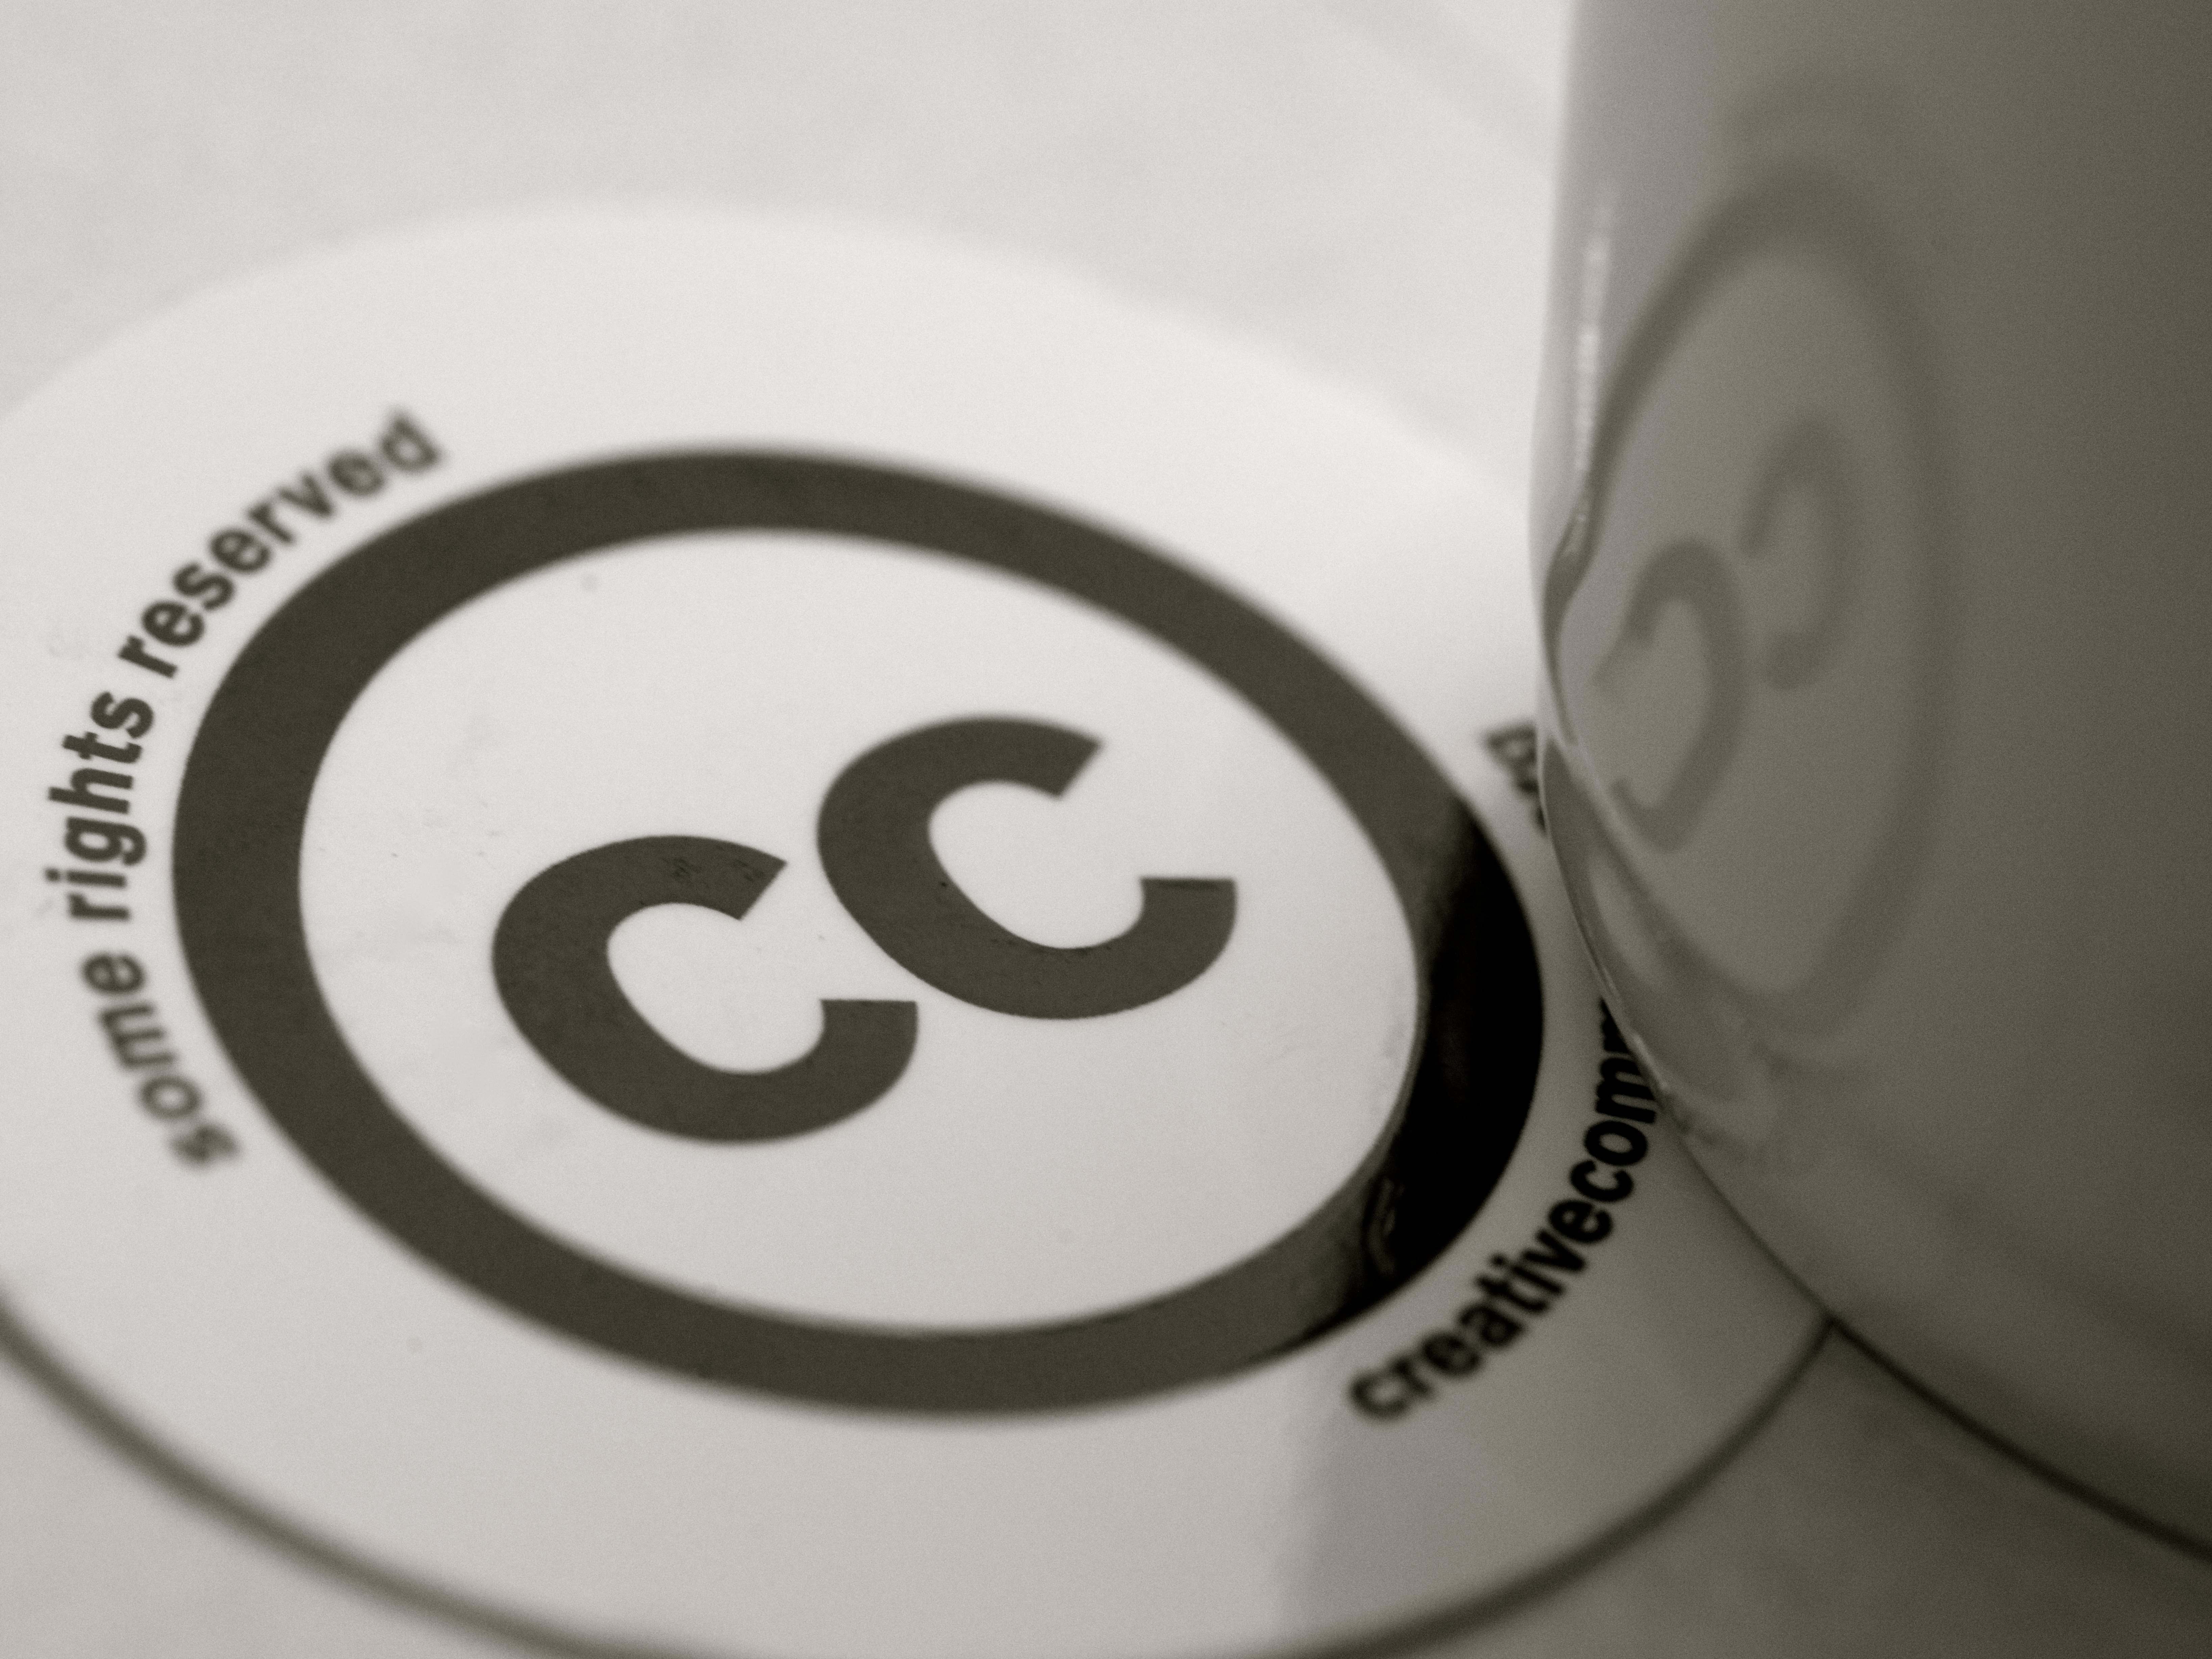 Sticker du logo Creative Commons avec une tasse